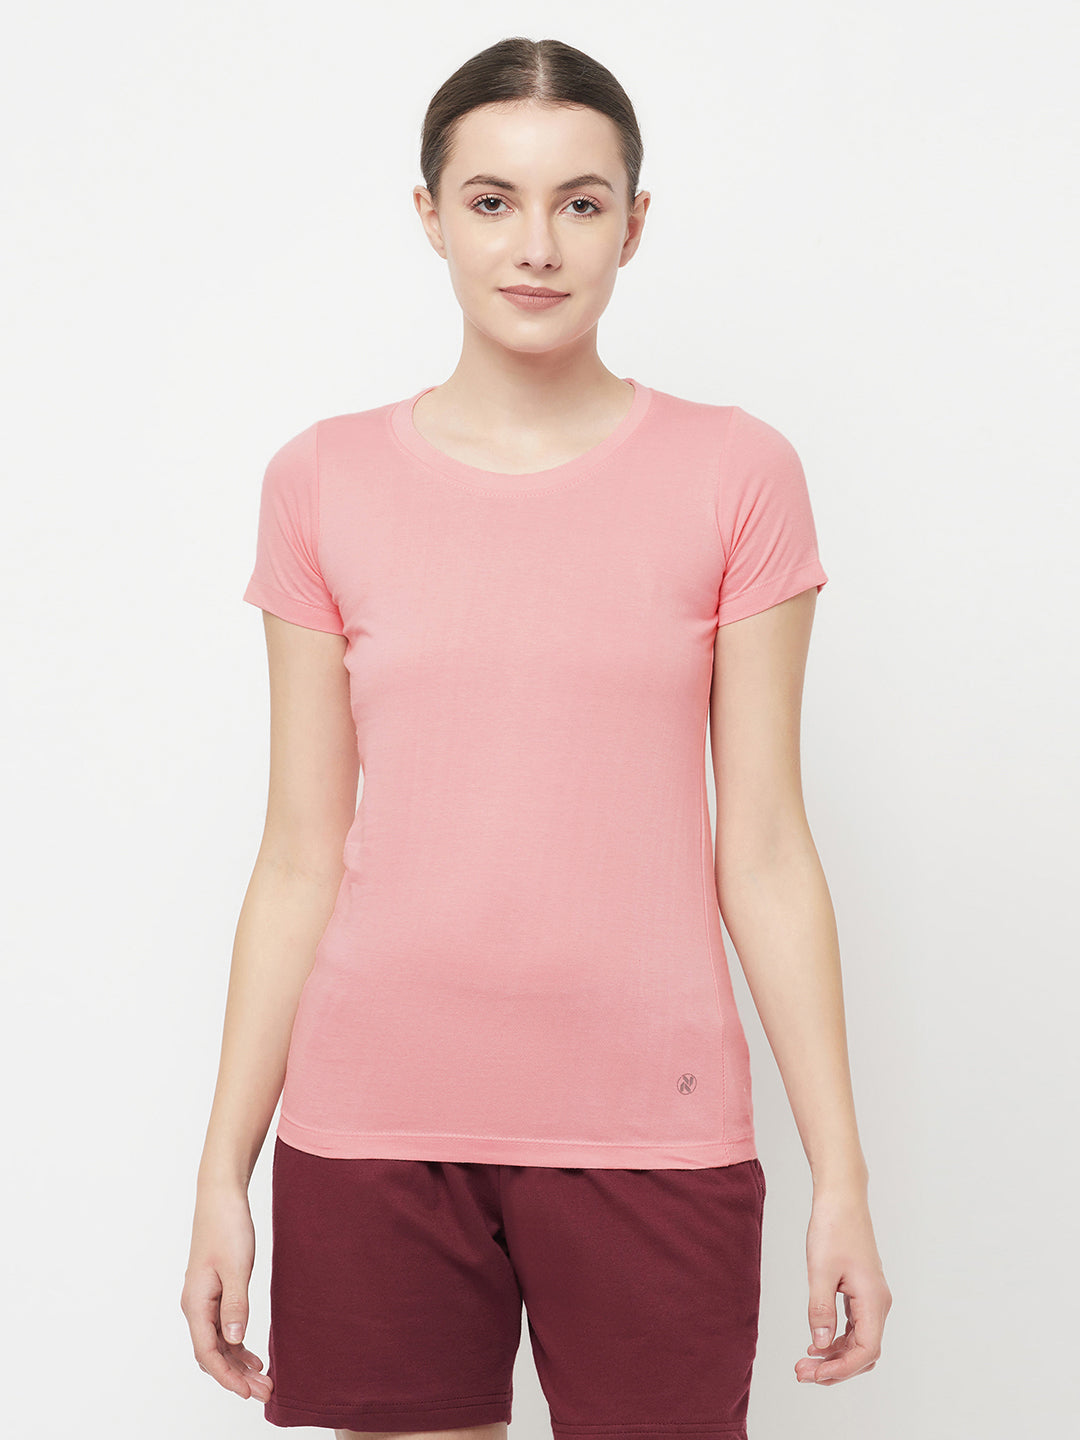 Slim Fit Premium Cotton Tshirts (Pack of 2- Black, Pink)